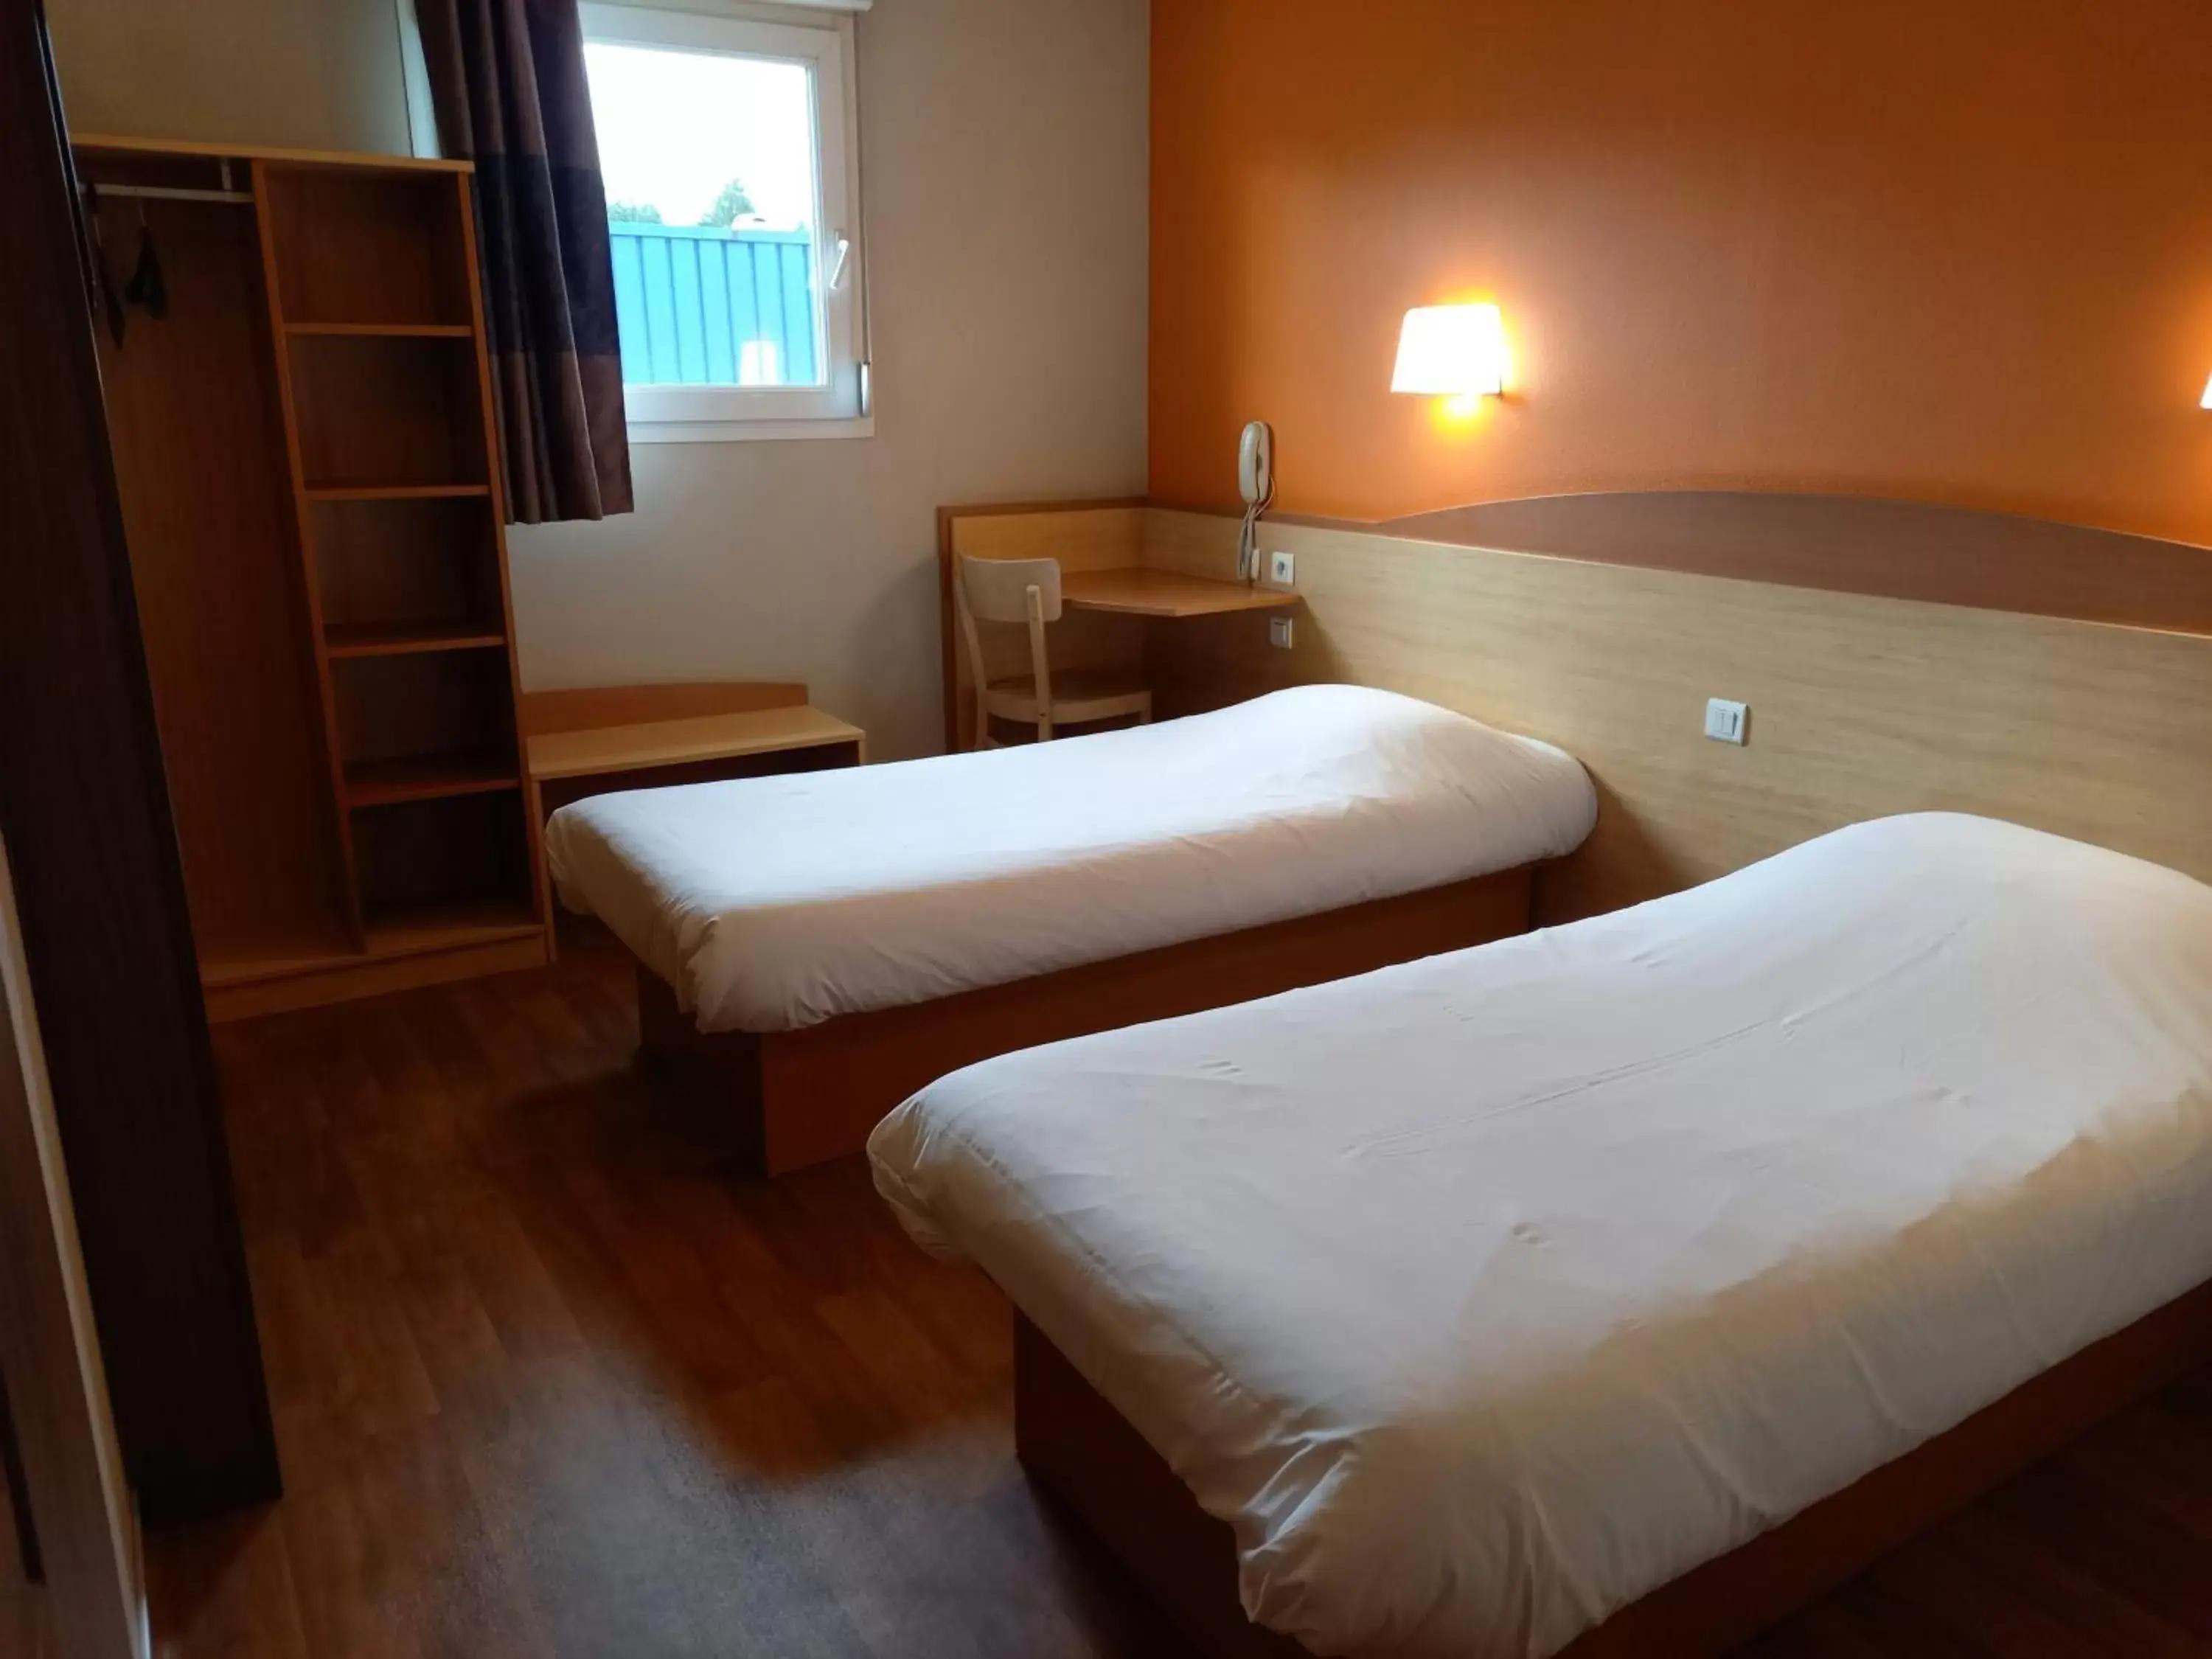 Bed, Room Photo in B&B HOTEL Saint-Etienne Monthieu